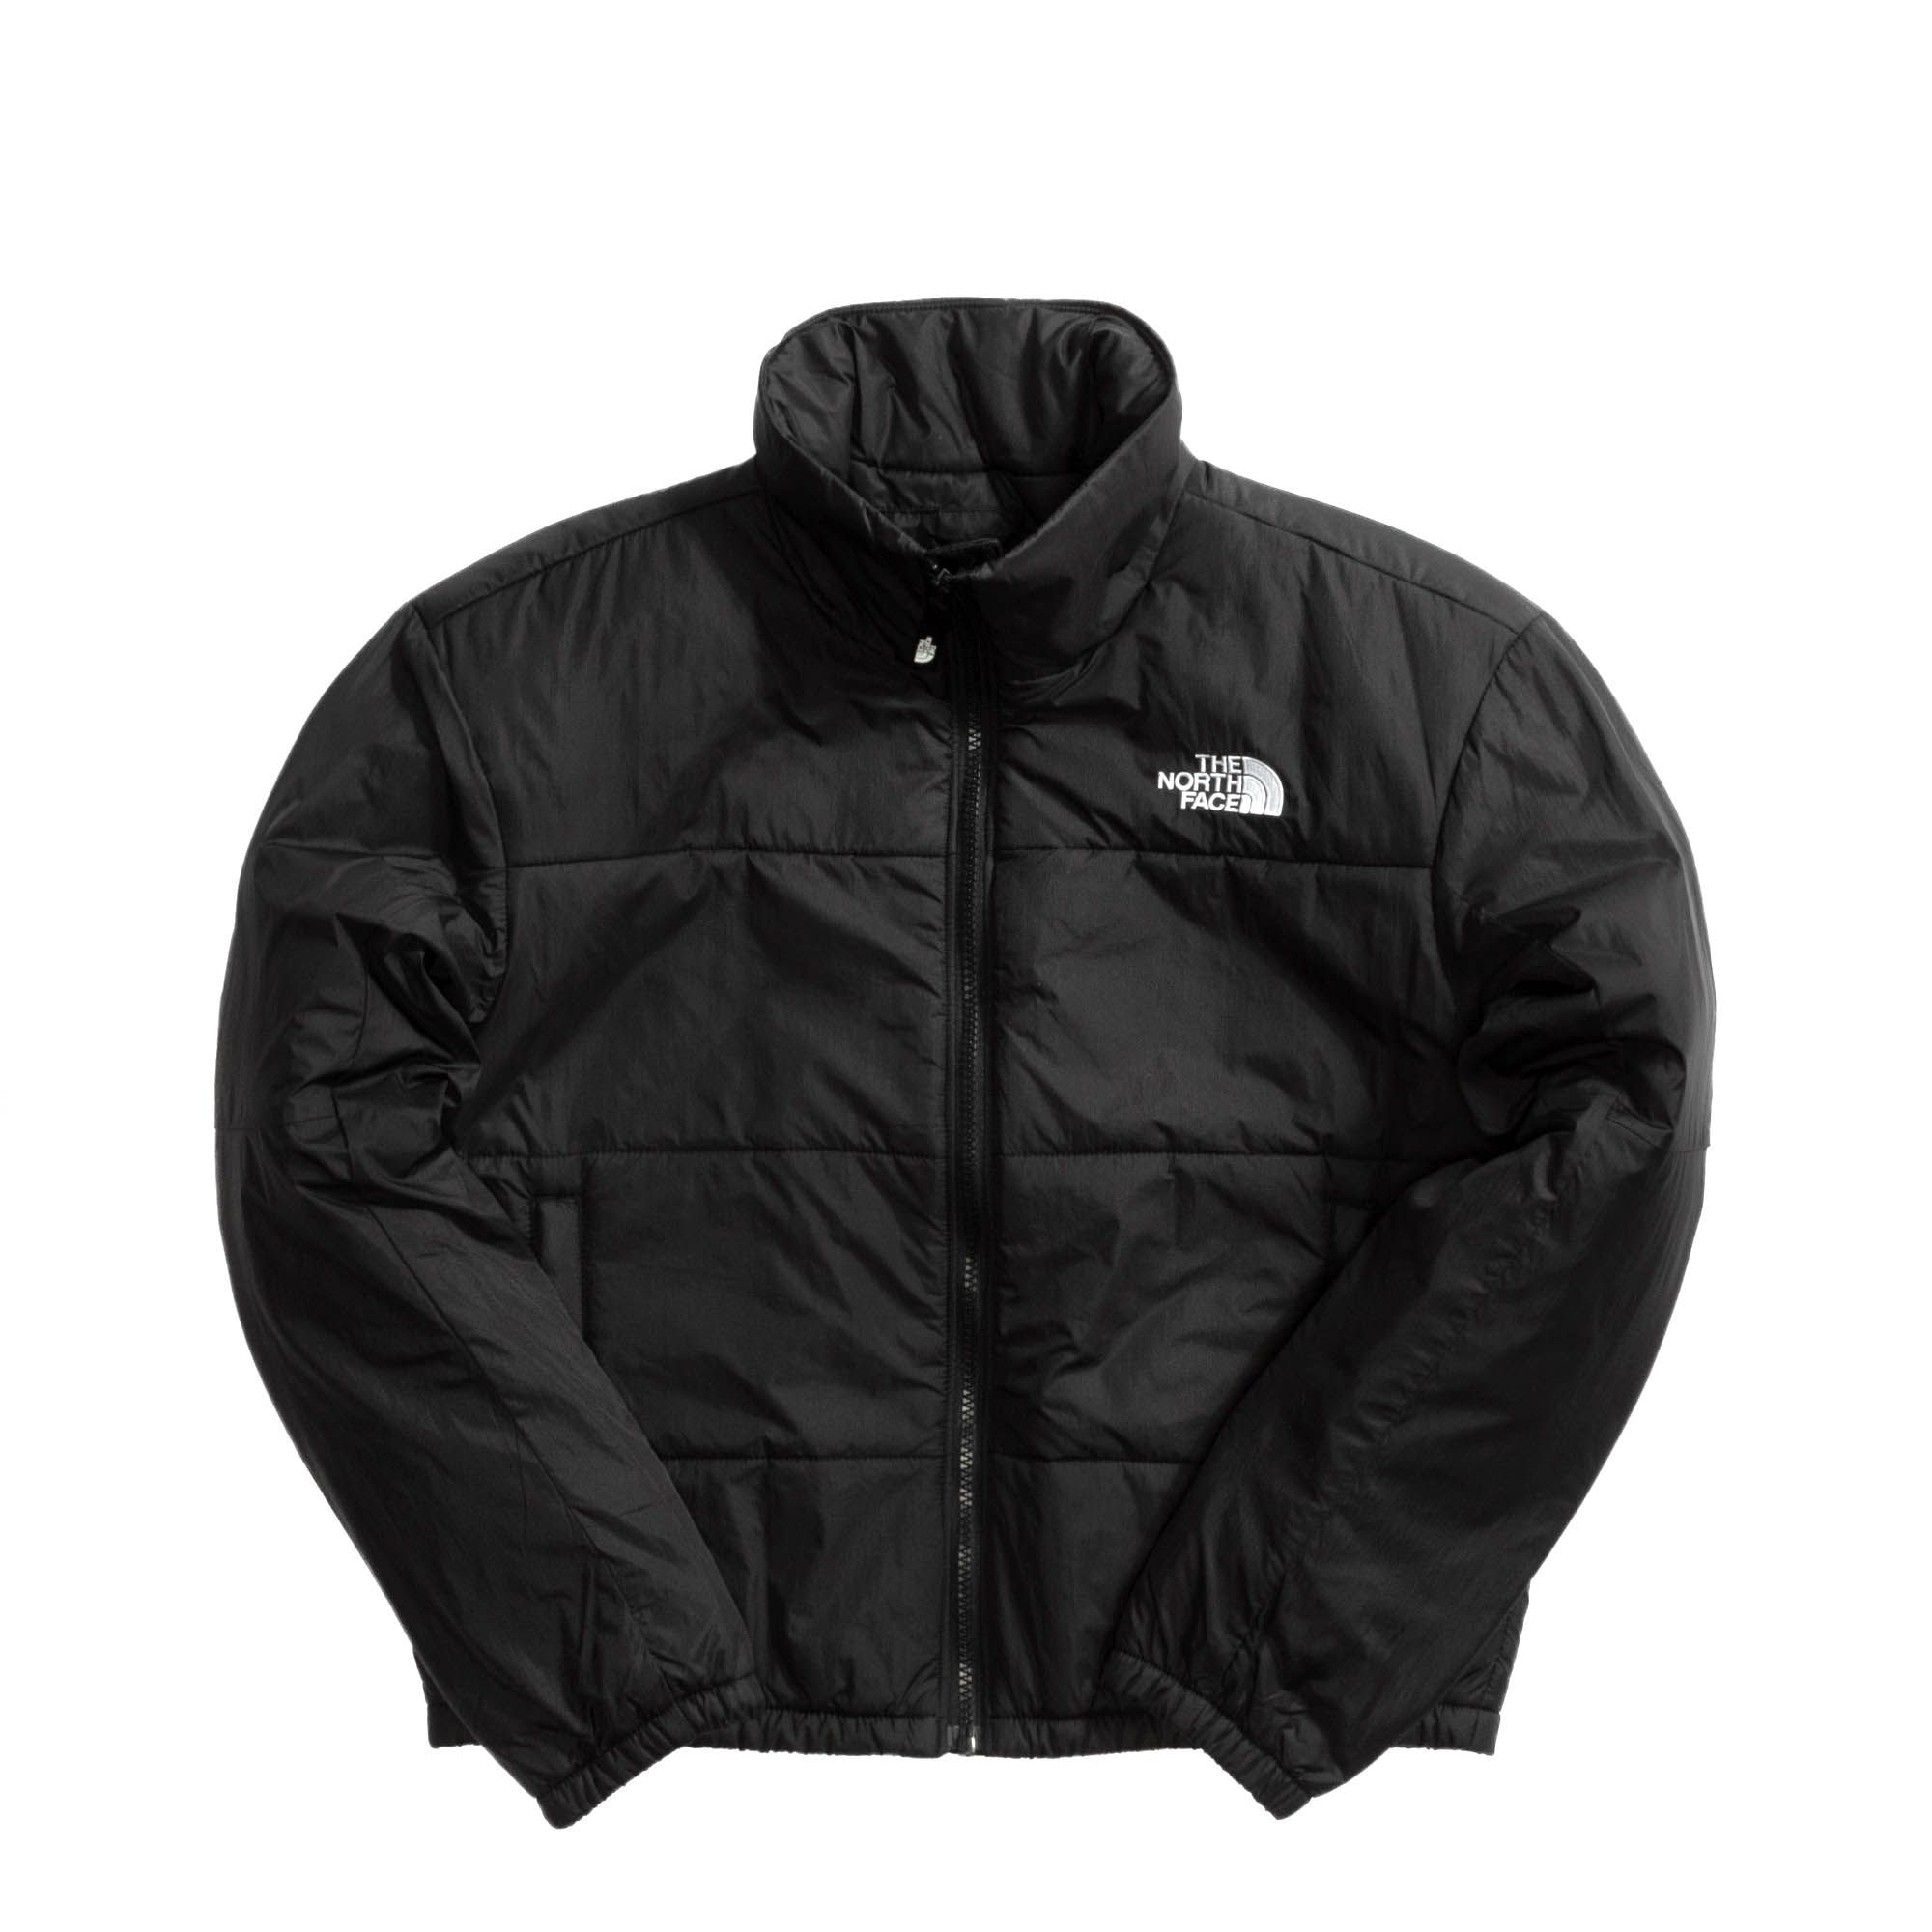 The North Face - wmns gosei puffer jacket women down & puffer jackets black in größe:xs